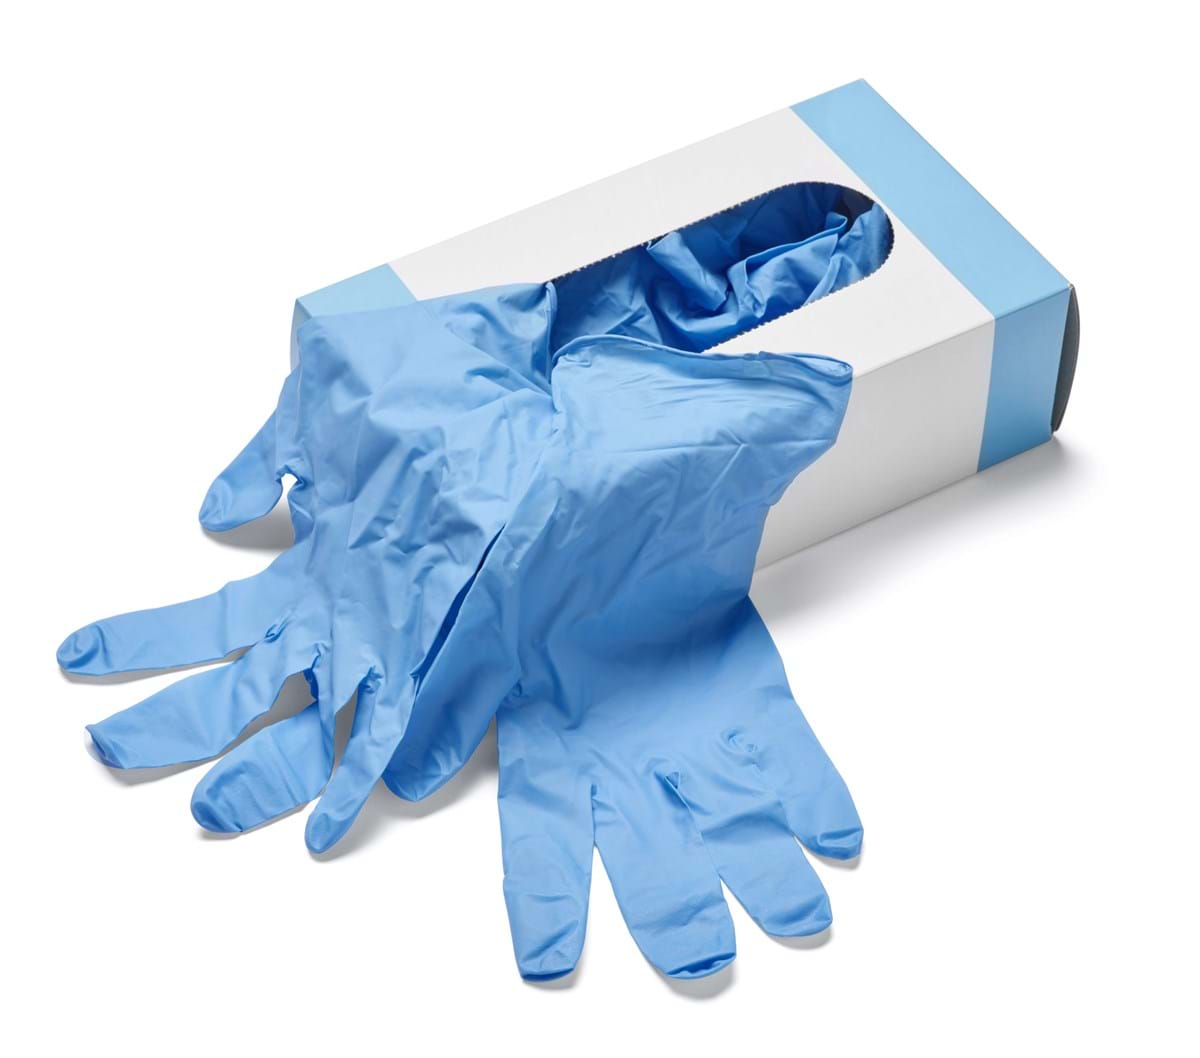 box of blue latex gloves